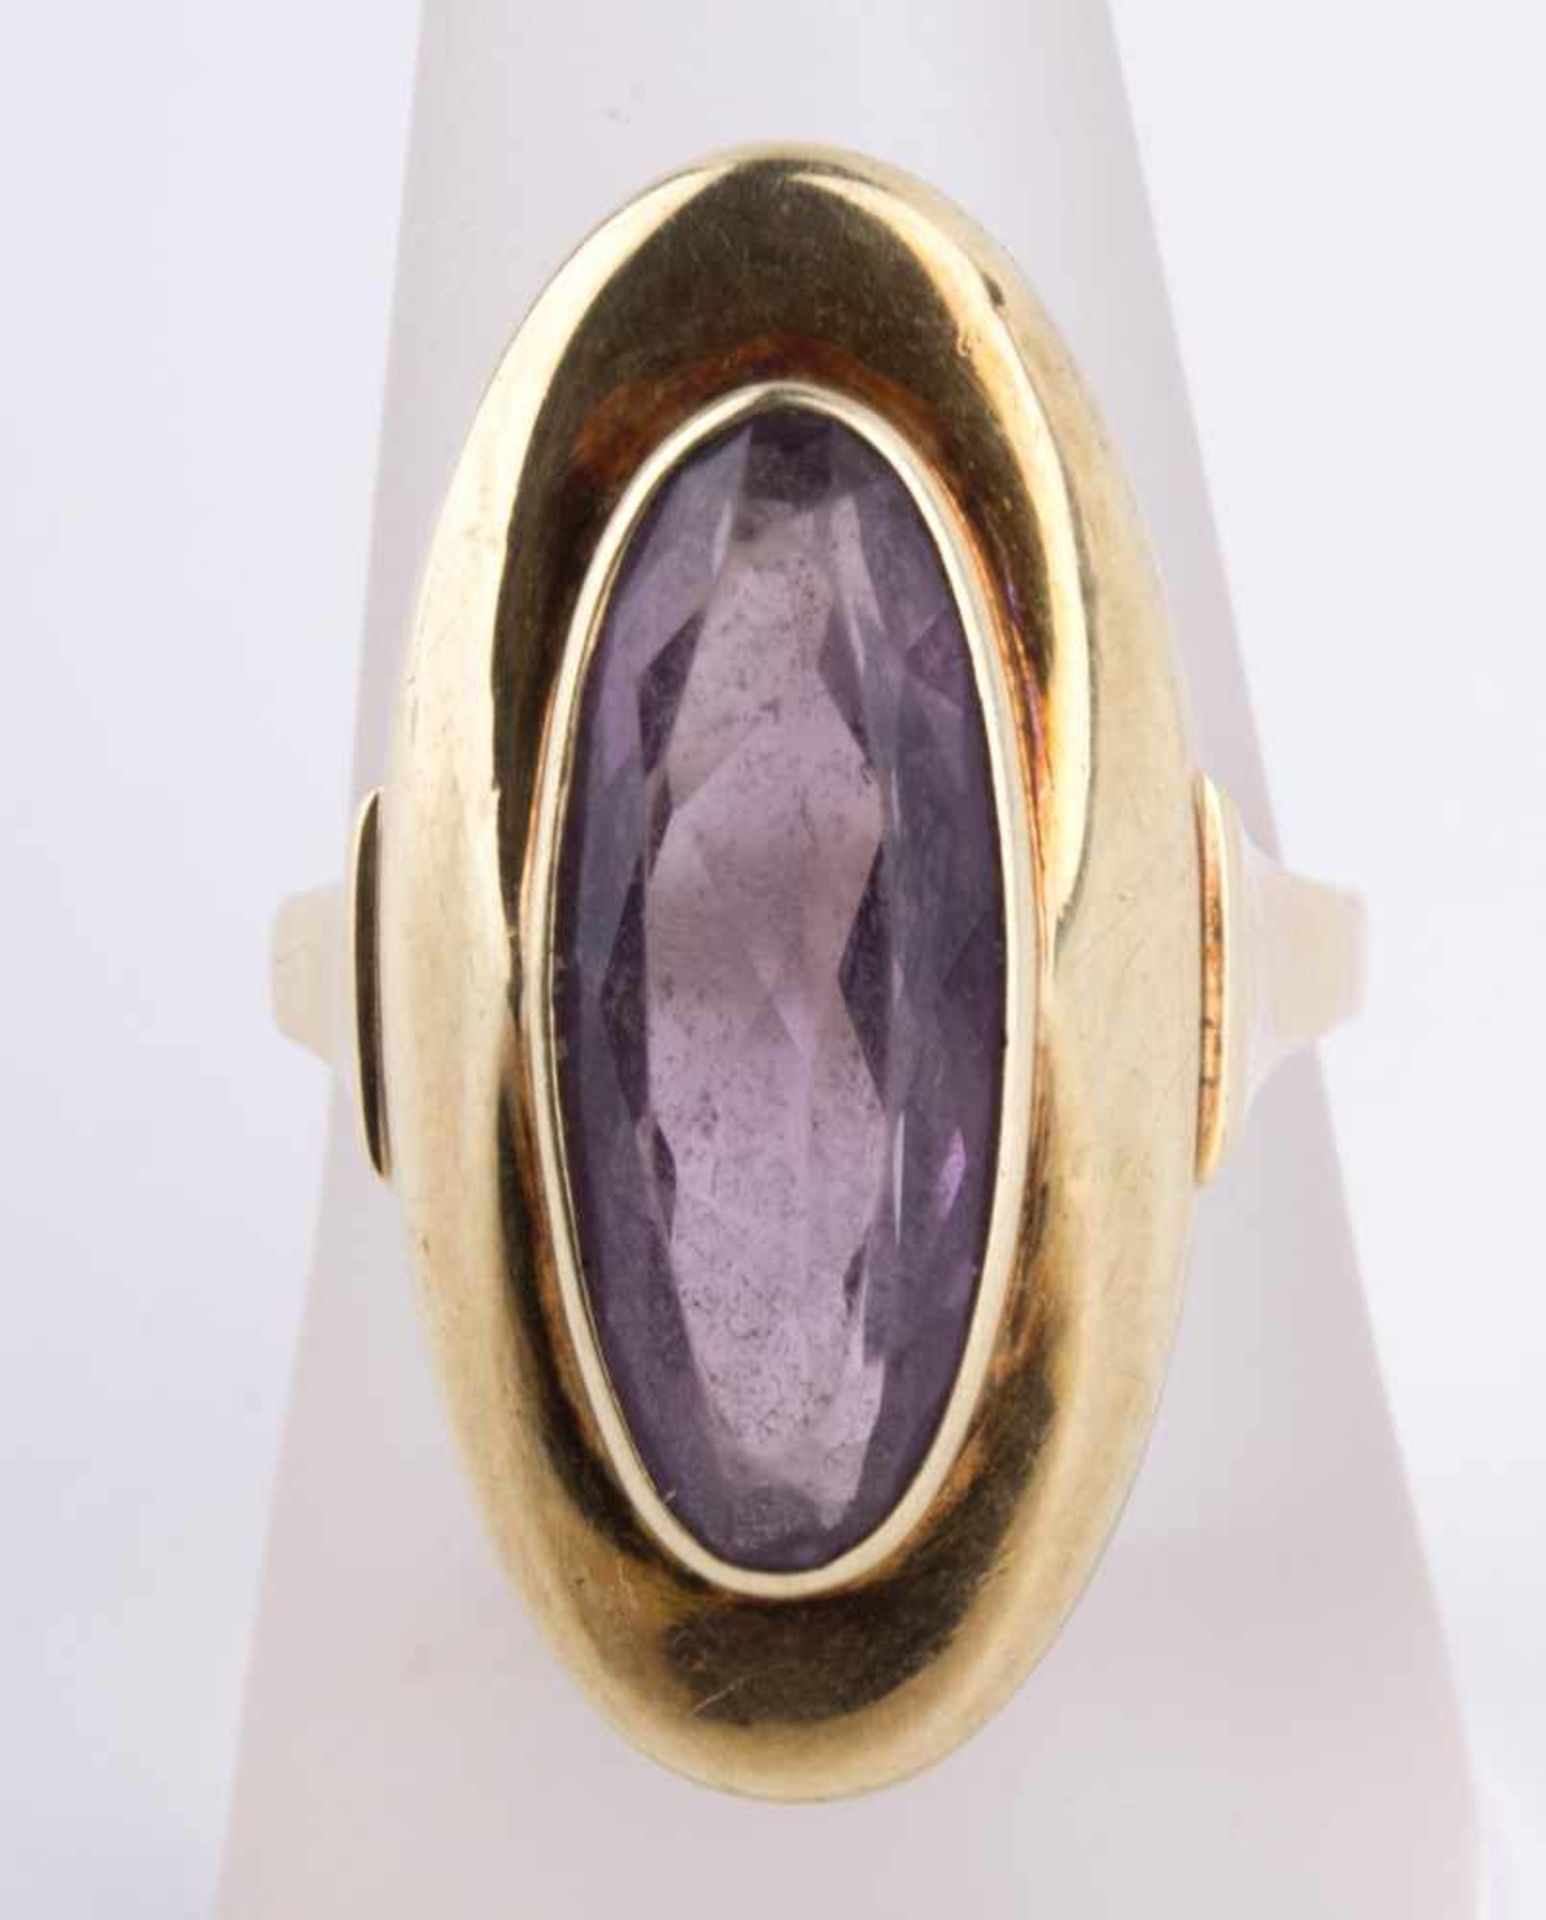 Damen Amethystring / Women's amethyst gold ring GG 585/000, RG ca. 58, Gesamtgewicht ca. 6 g.